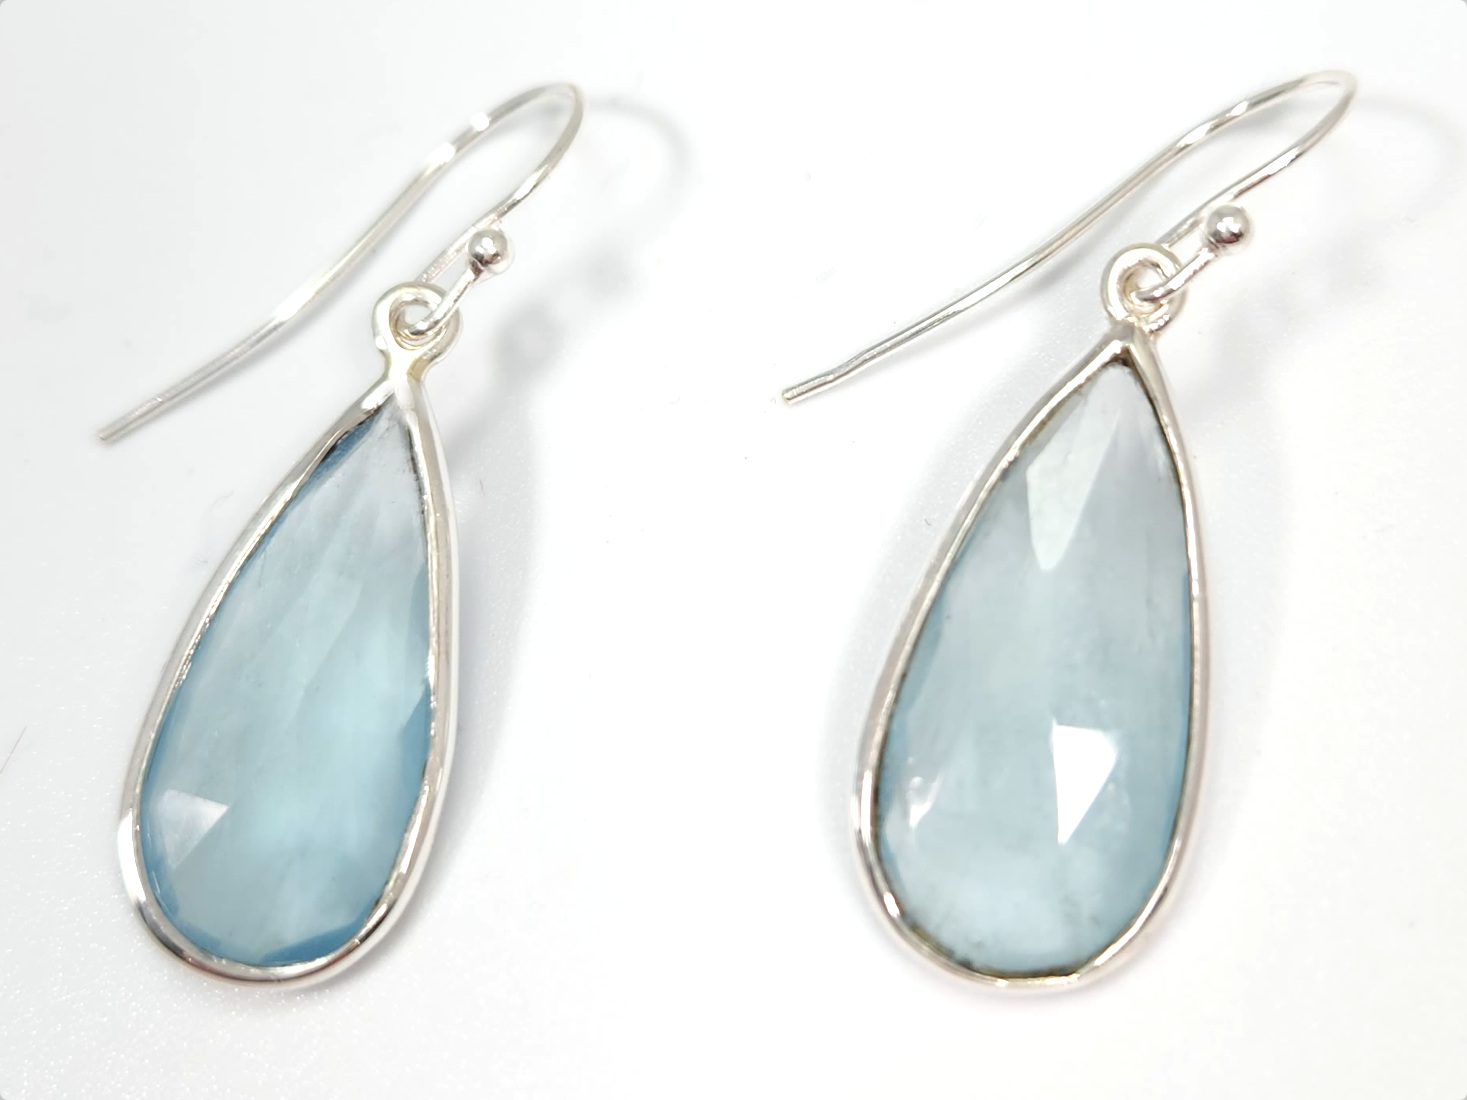 Handmade Aquamarine Earrings Sterling Silver Wire Earrings - Etsy |  Handmade wire jewelry, Handmade jewelry earrings, Silver wire earrings